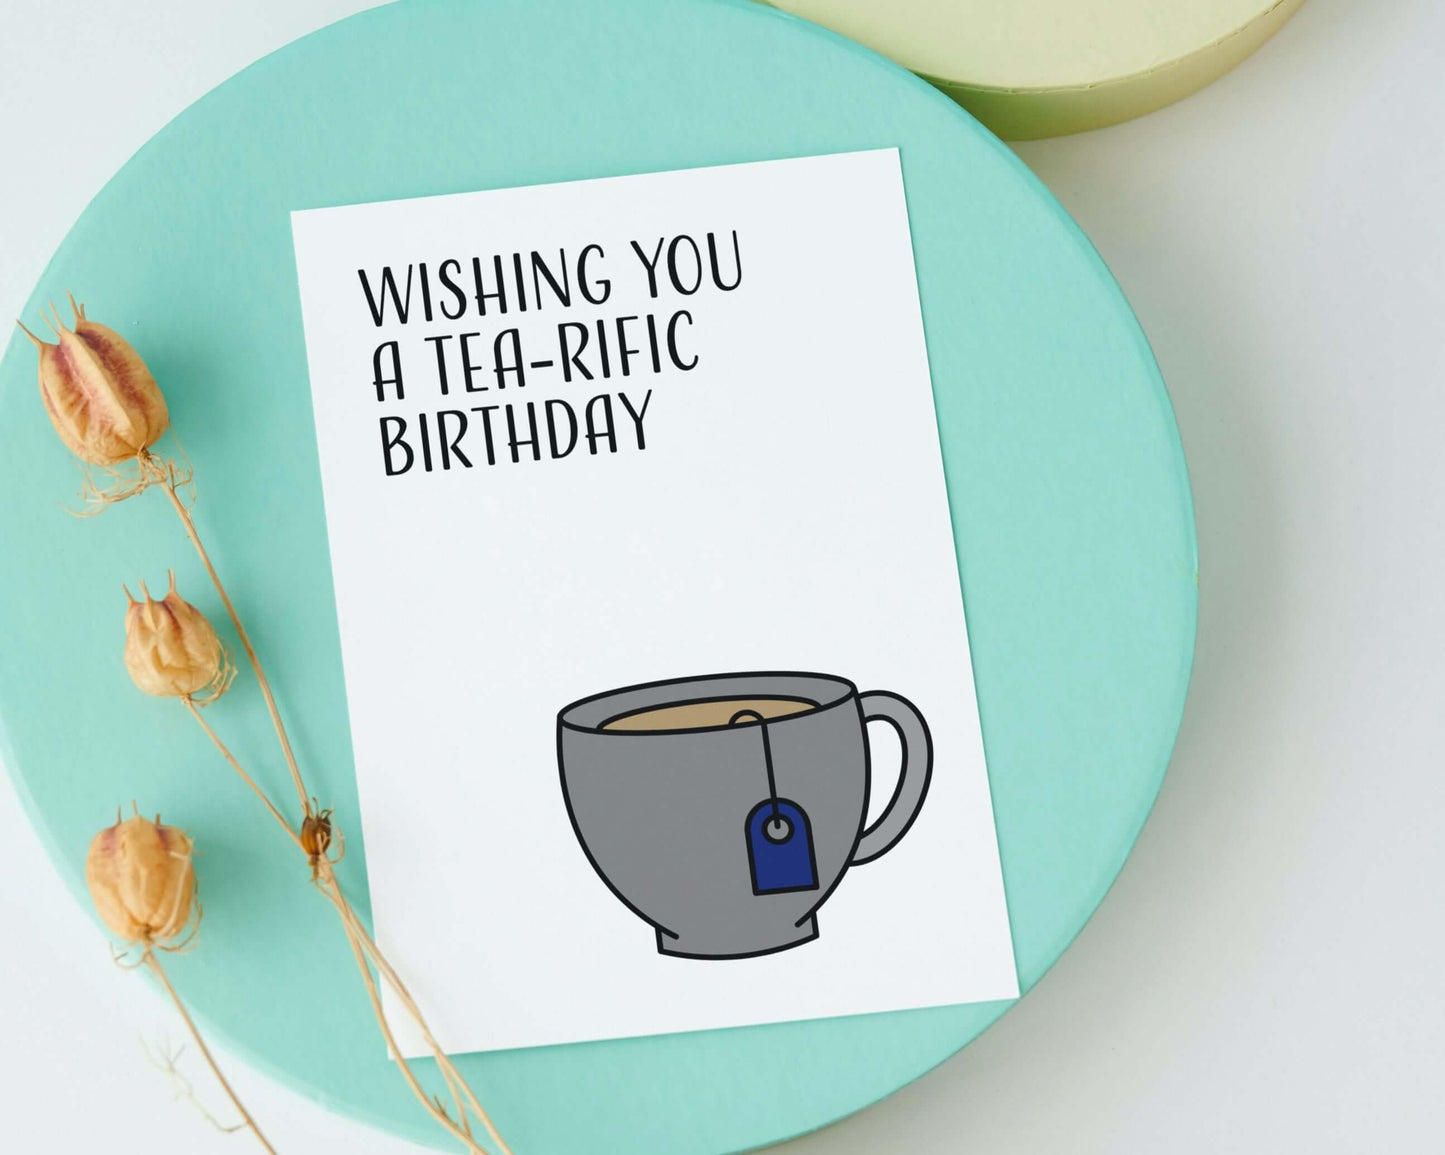 Wishing You a Tea-Rific Birthday | Funny Tea Pun Birthday Greeting Card